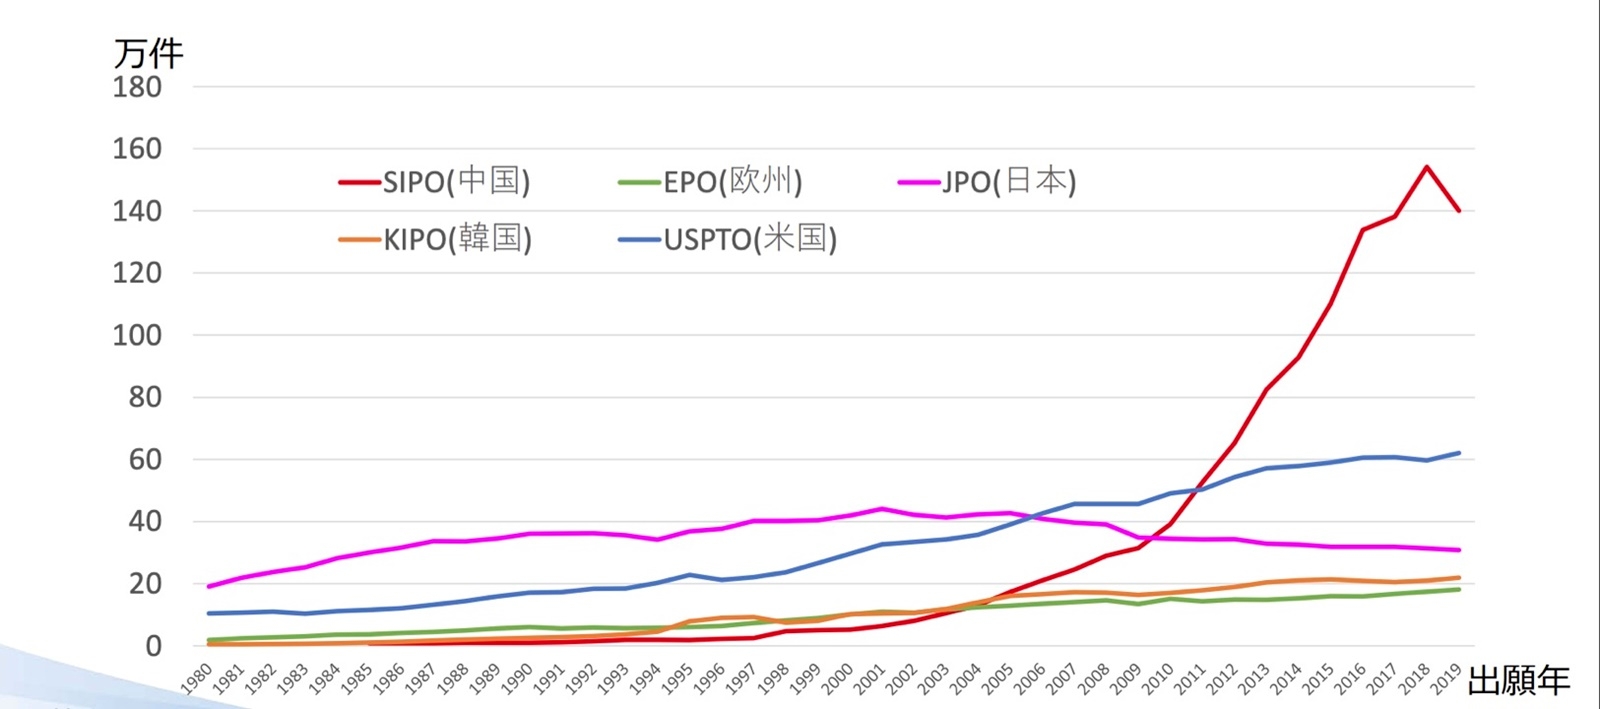 図1●世界各国の特許出願動向 2020年は暫定値。（出所：特許庁 WIPO IP Statistics Data Center、特許行政年次報告書2020、各国のWebサイト）